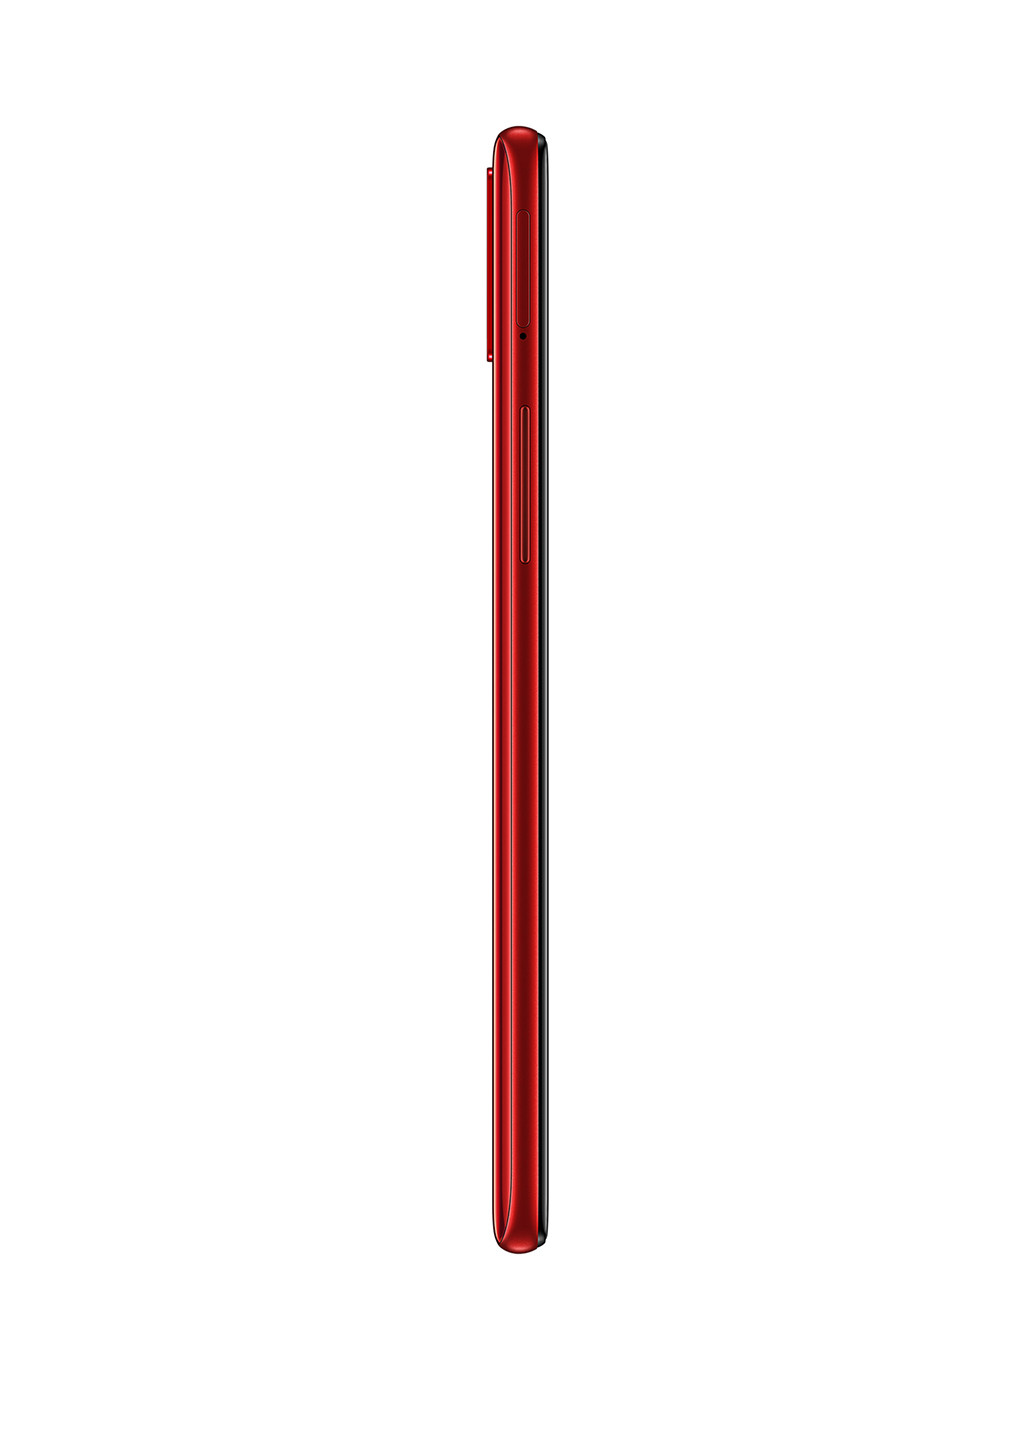 Смартфон Samsung galaxy a20s 3/32gb red (154686400)